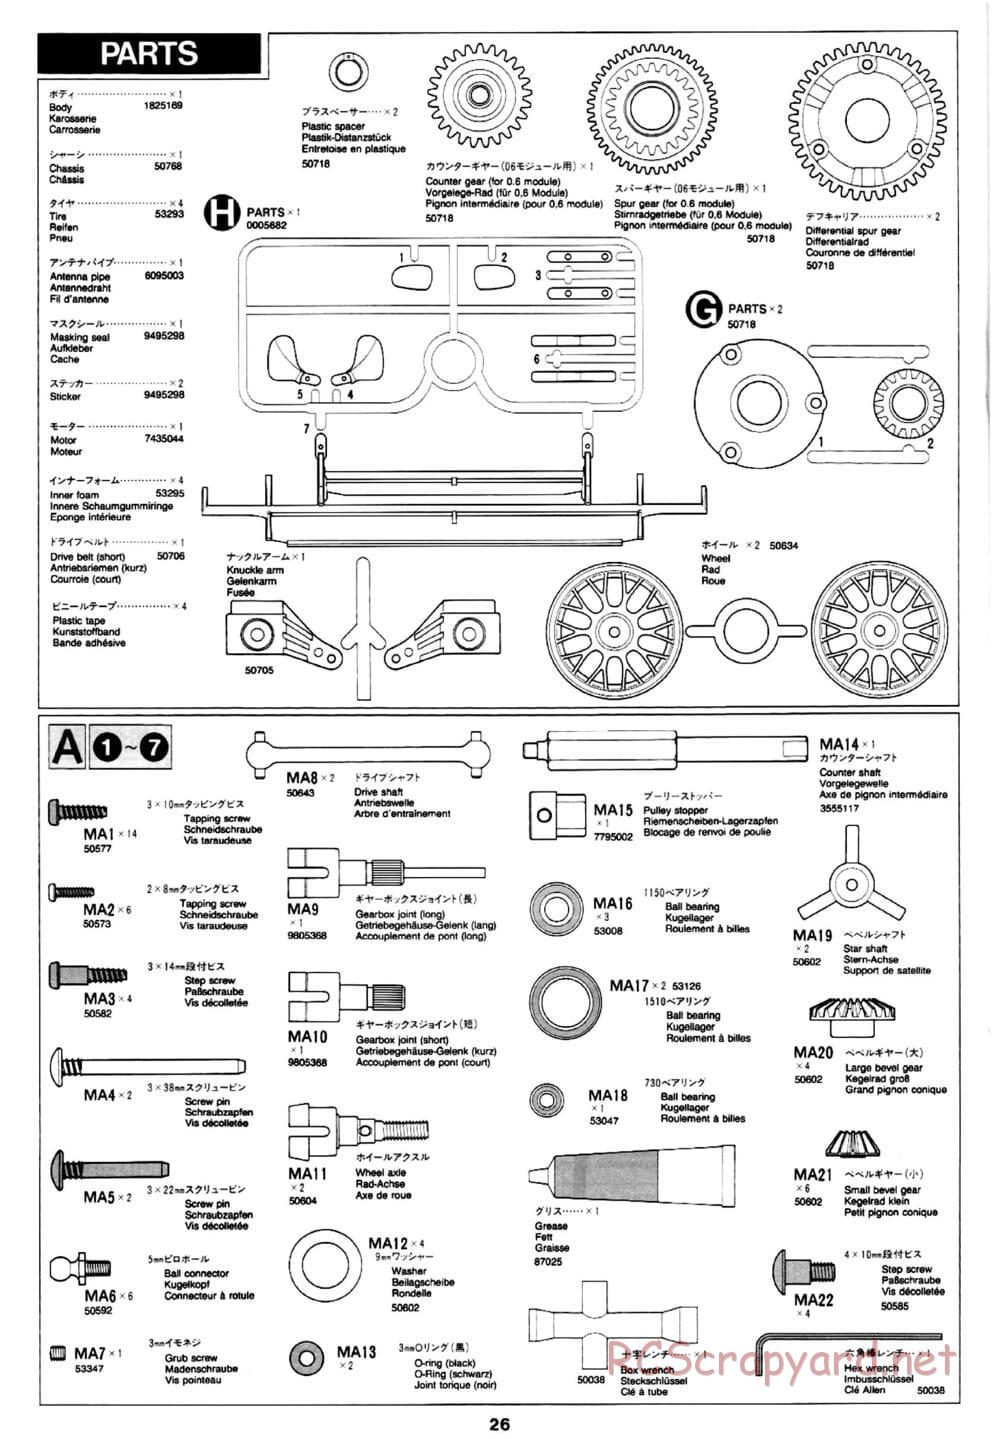 Tamiya - Mobil 1 NSX - TA-03R Chassis - Manual - Page 26